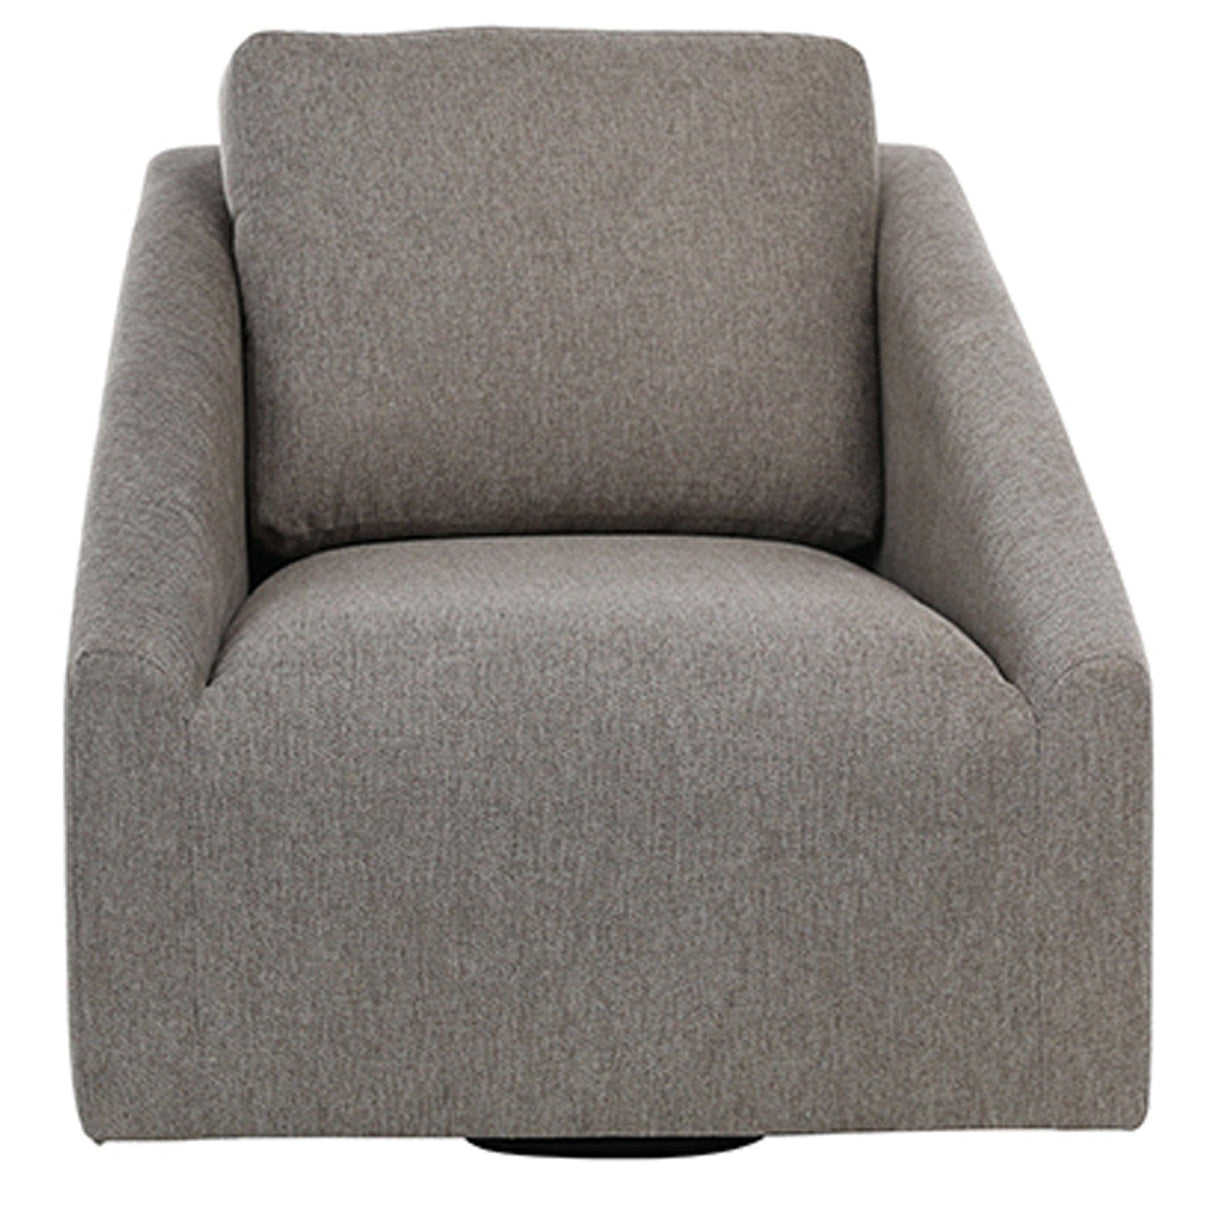 Lyndon Leigh Andrew Swivel Chair Furniture lyndonleigh-DOV17125LB